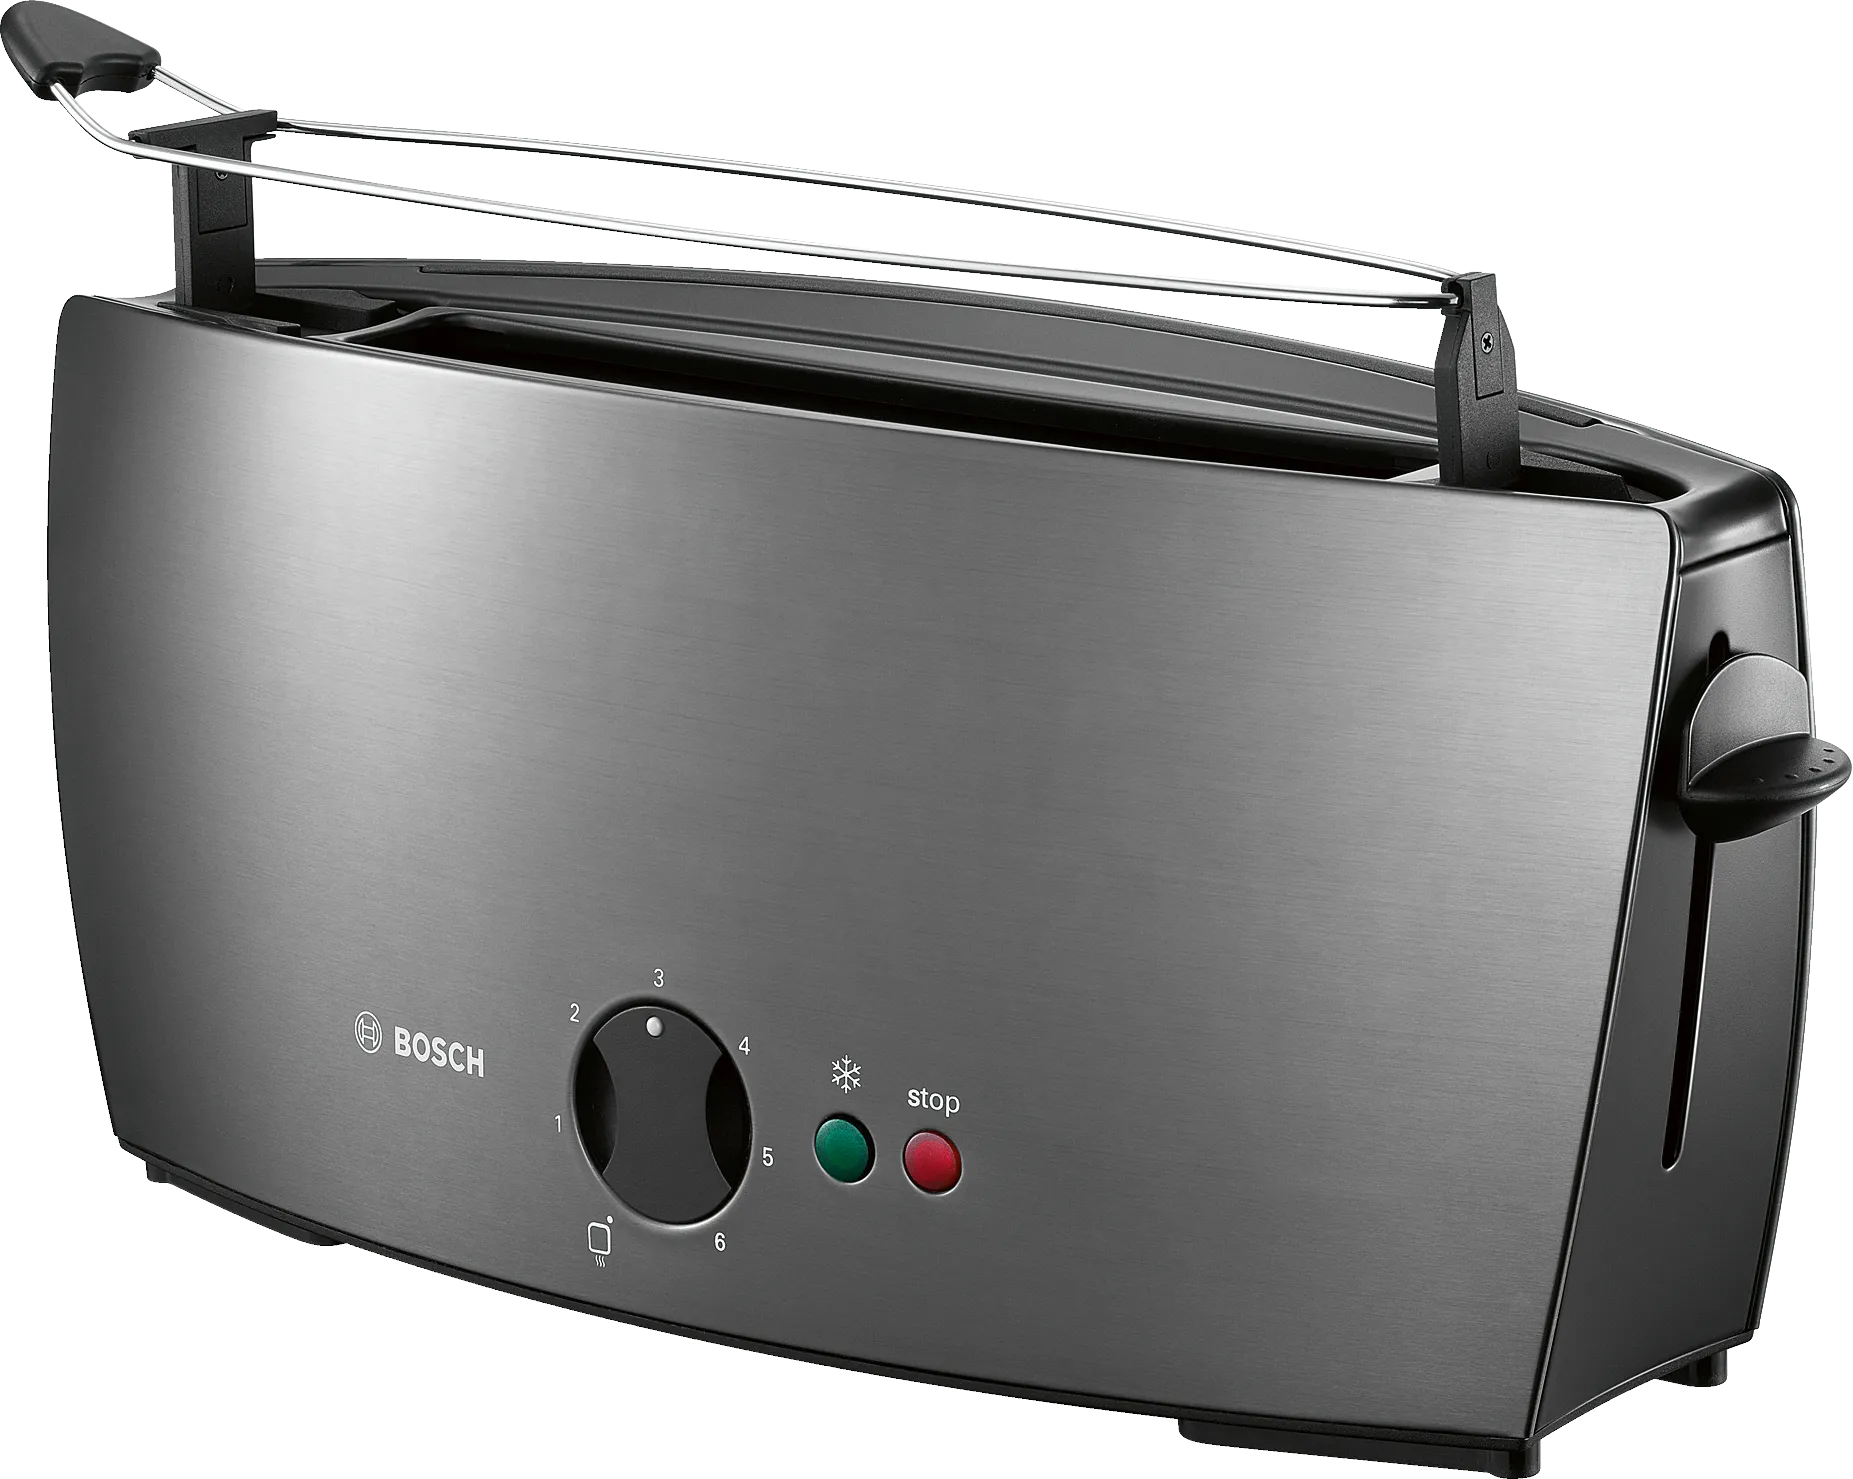 TAT6805GB Long slot toaster